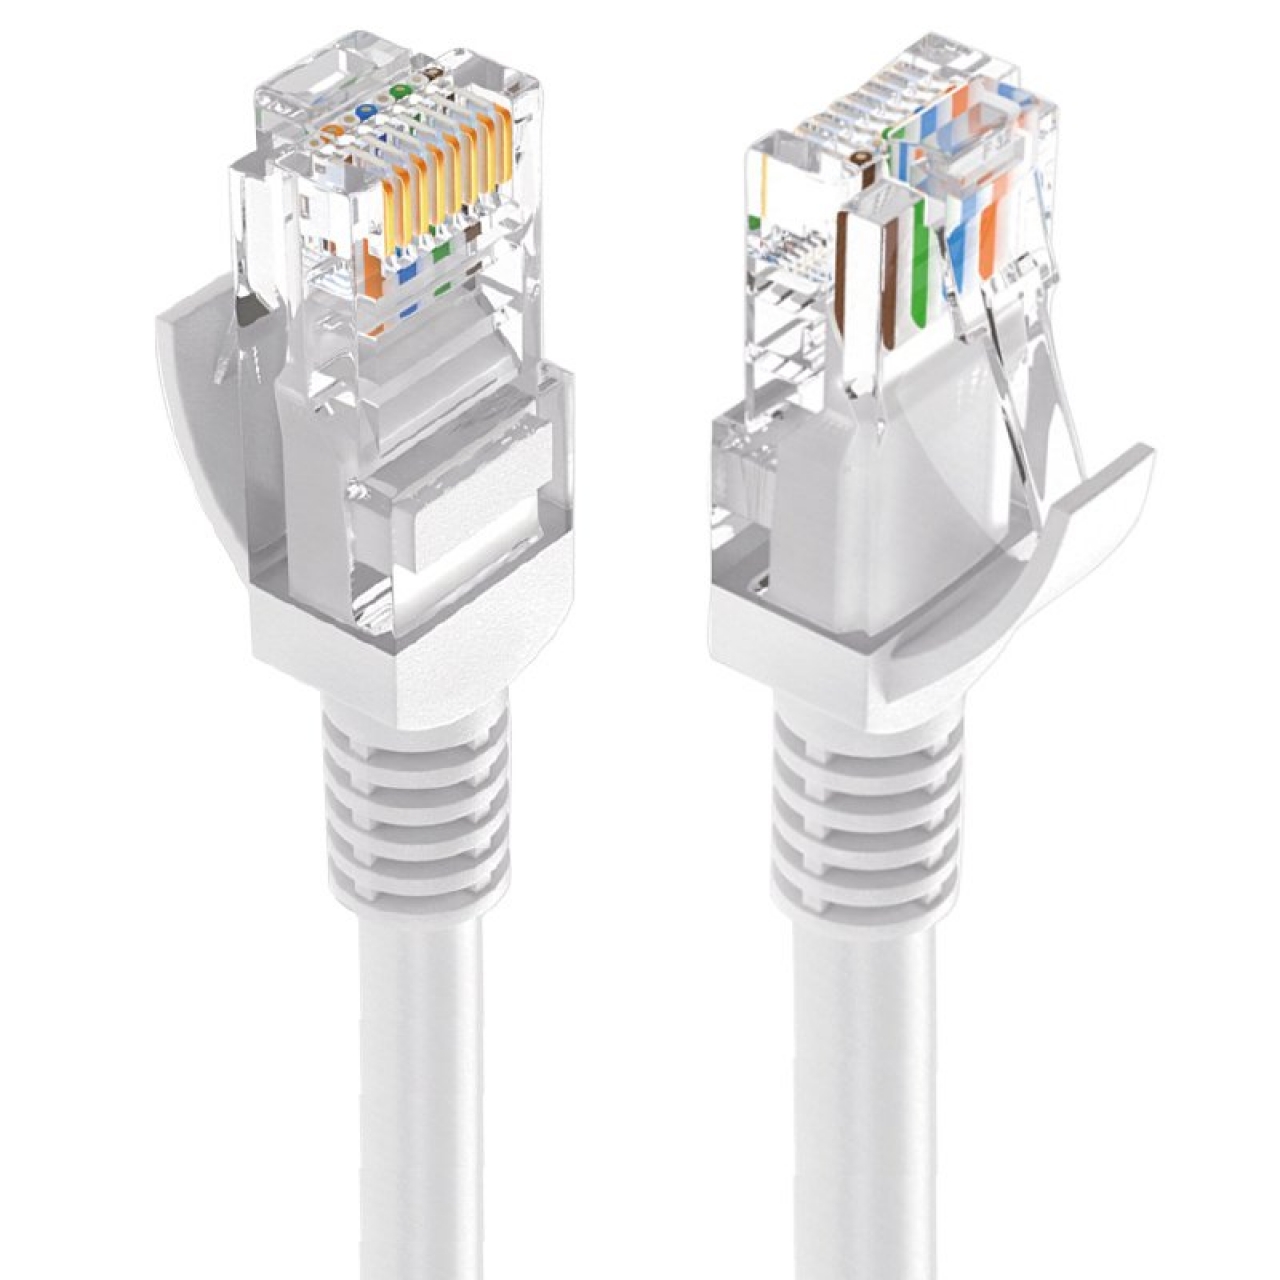 Powermaster CAT 6 Ethernet RJ45 İnternet Kablosu 5 Metre